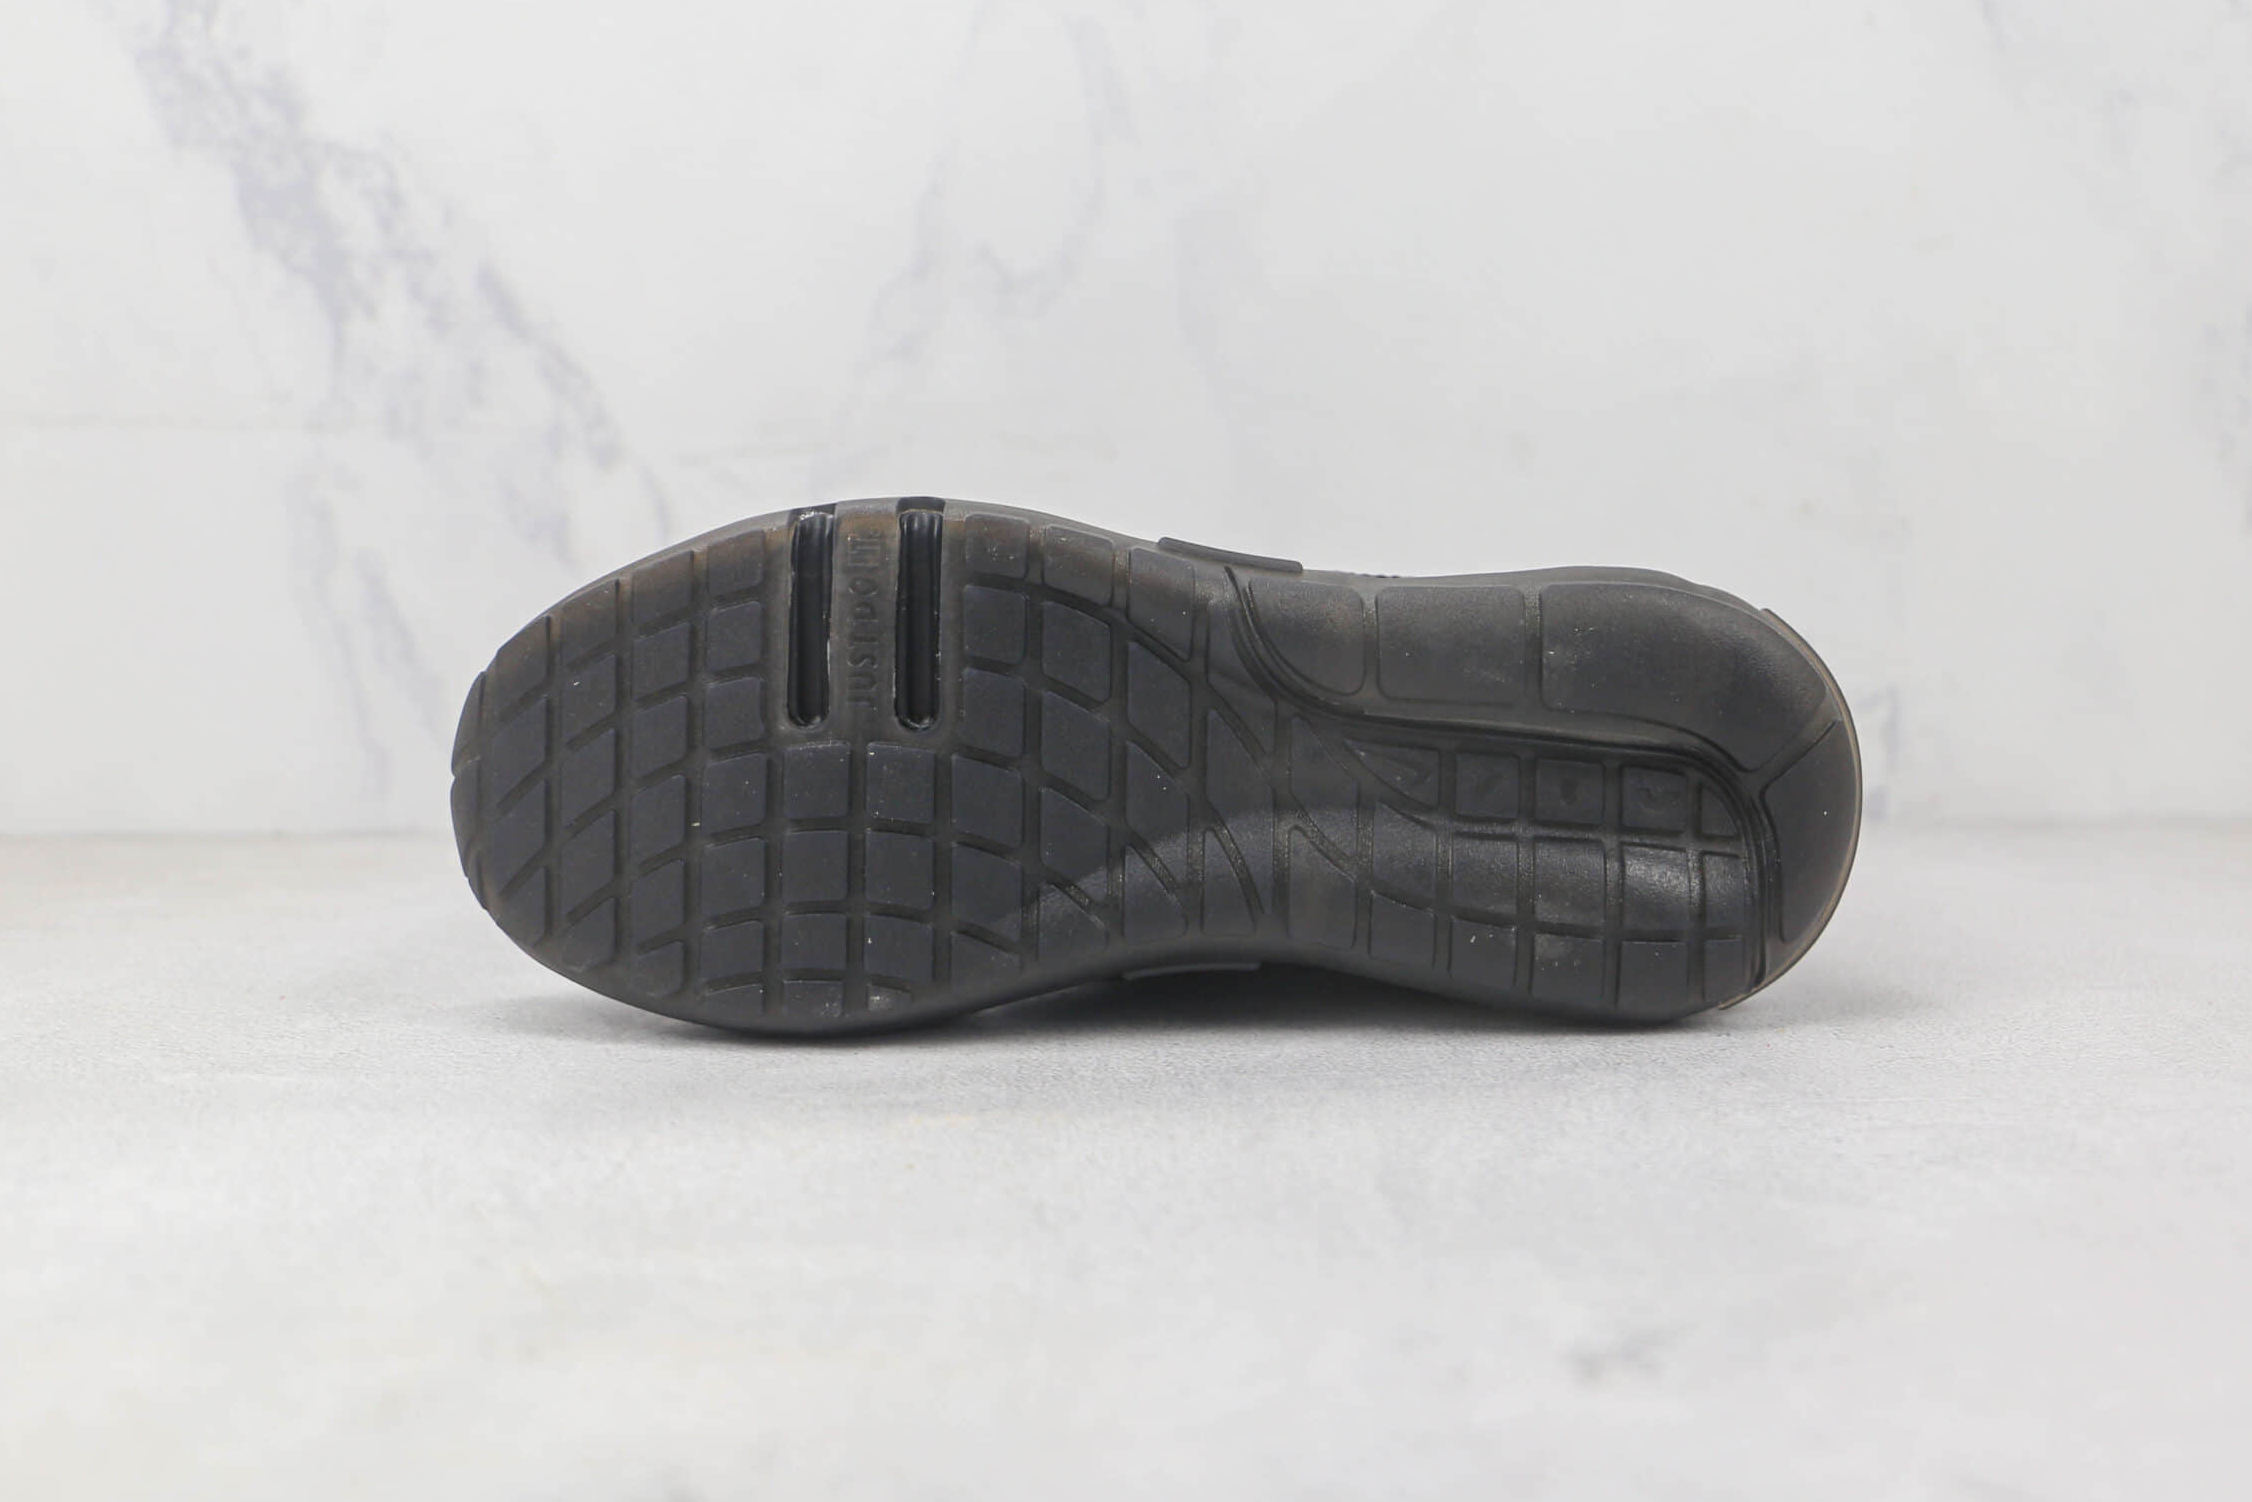 Nike Air Max Motif Low Tops Retro Black DH4801-003 - Shop Now at [Website Name]